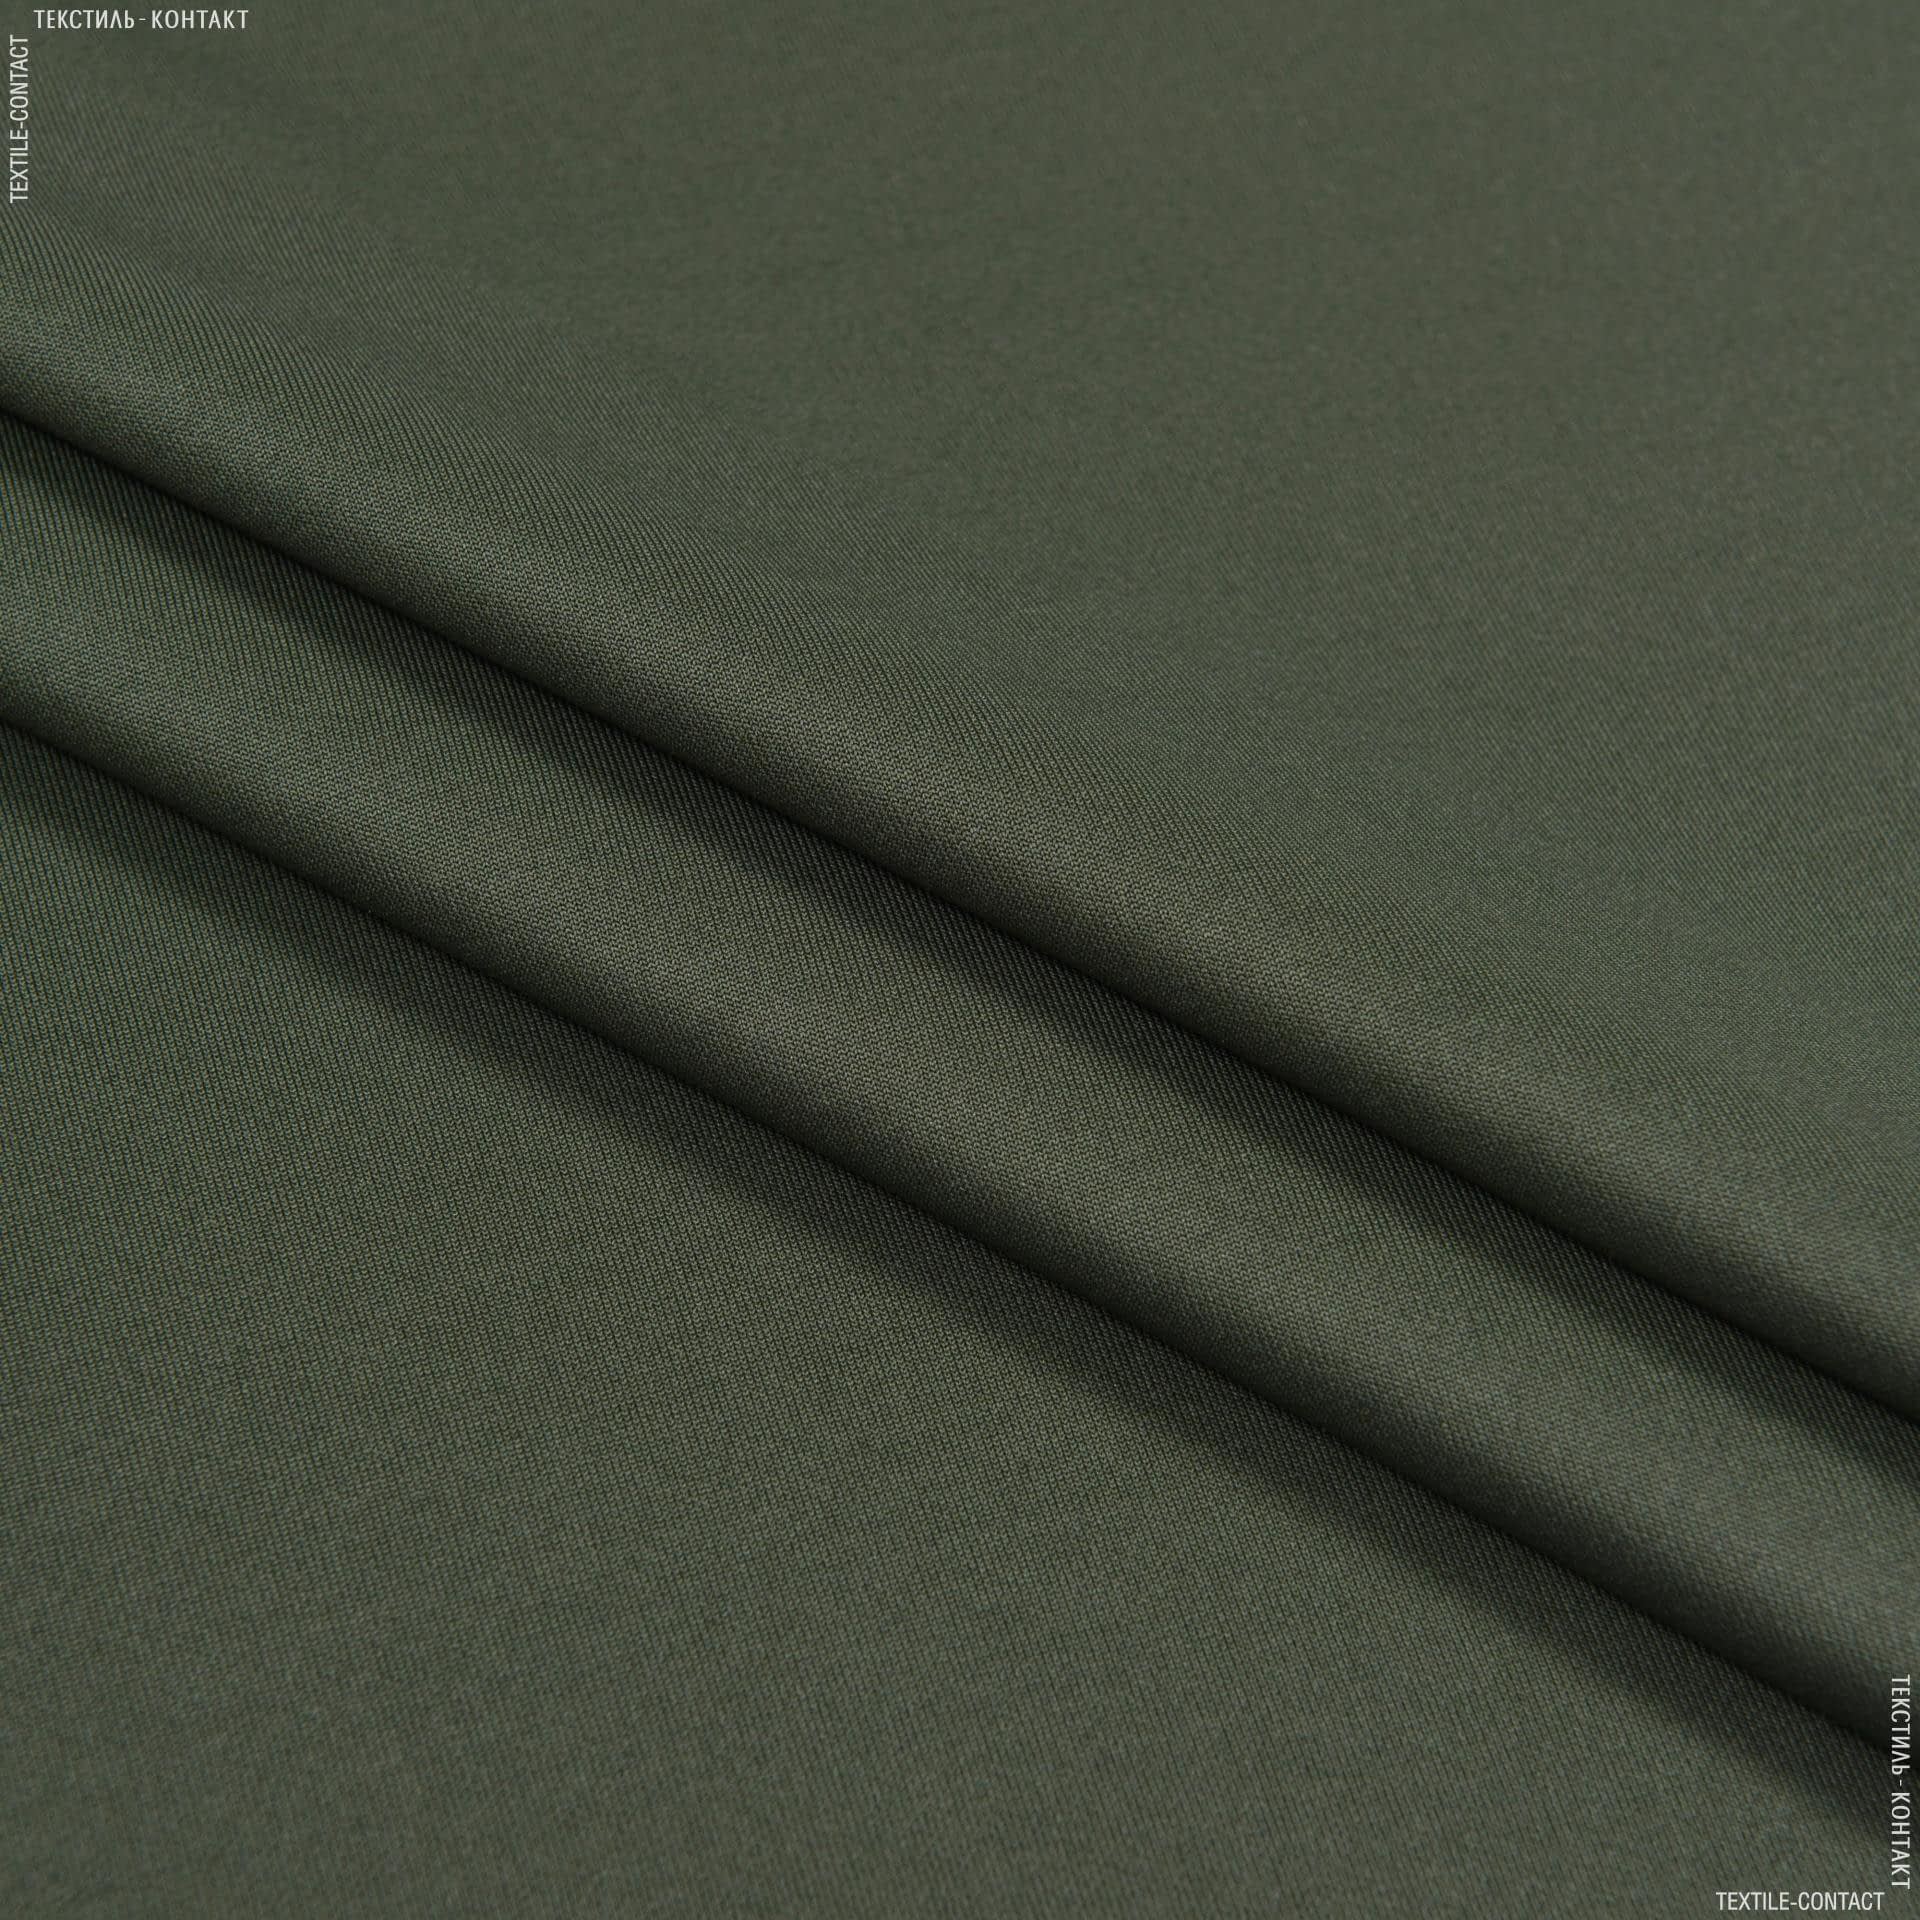 Ткани для брюк - Трикотаж дайвинг двухсторонний темный хаки